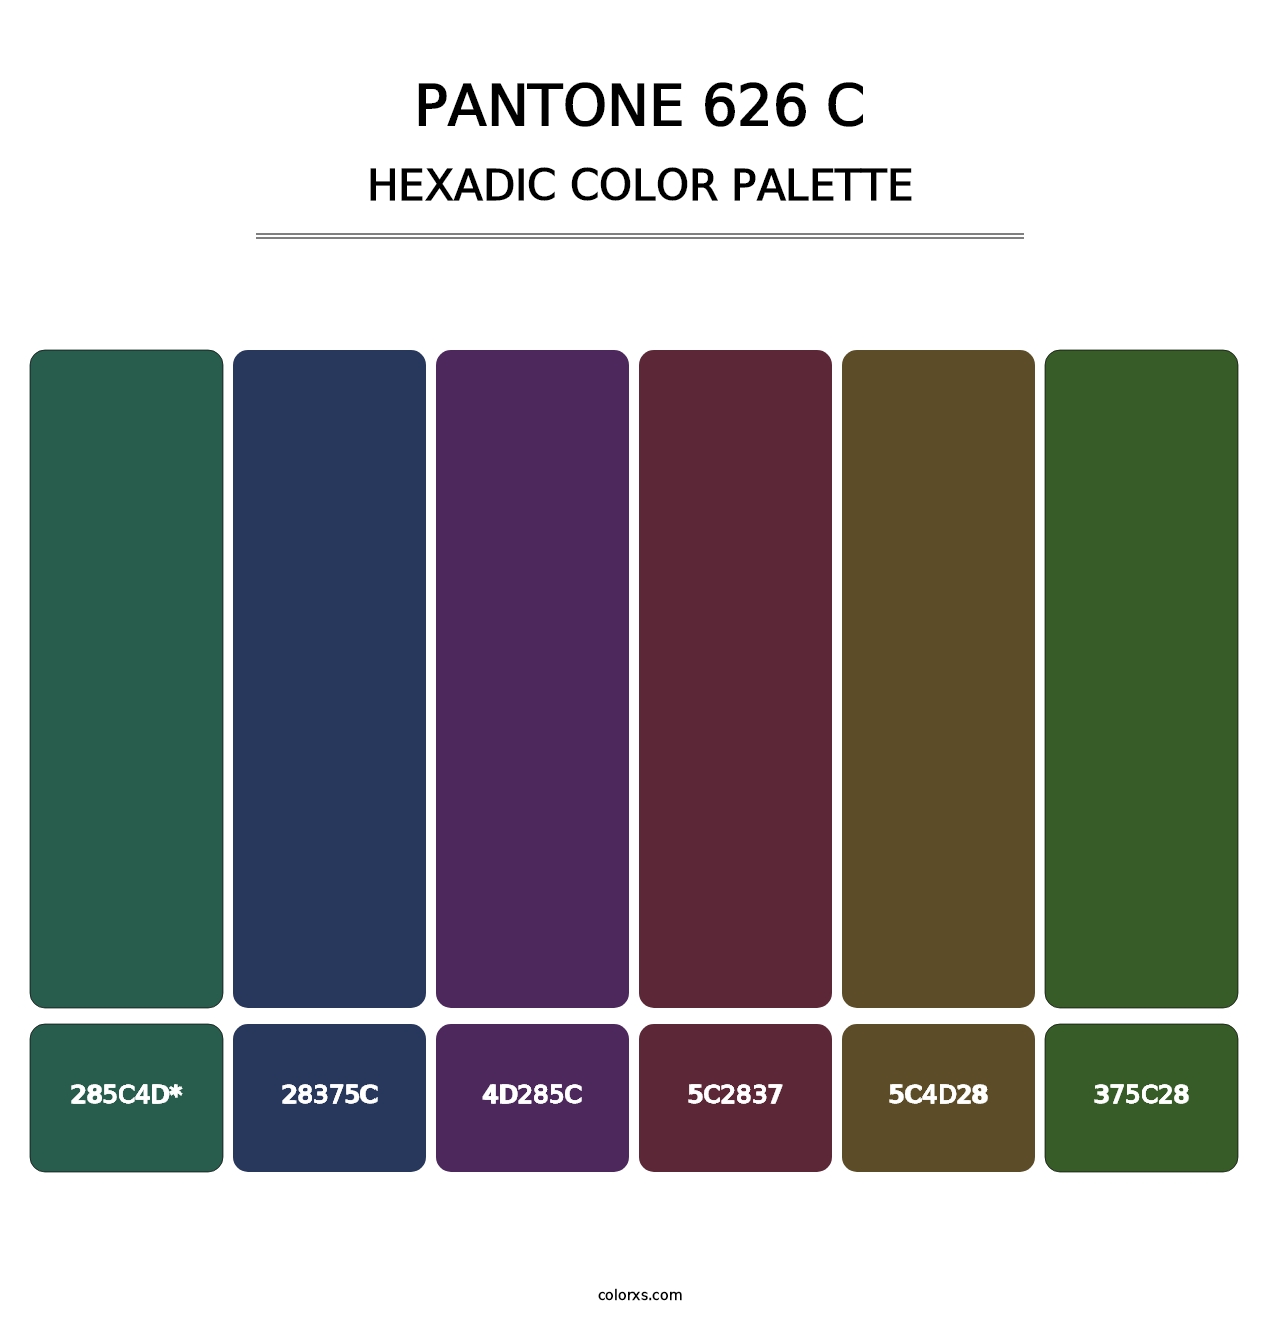 PANTONE 626 C - Hexadic Color Palette